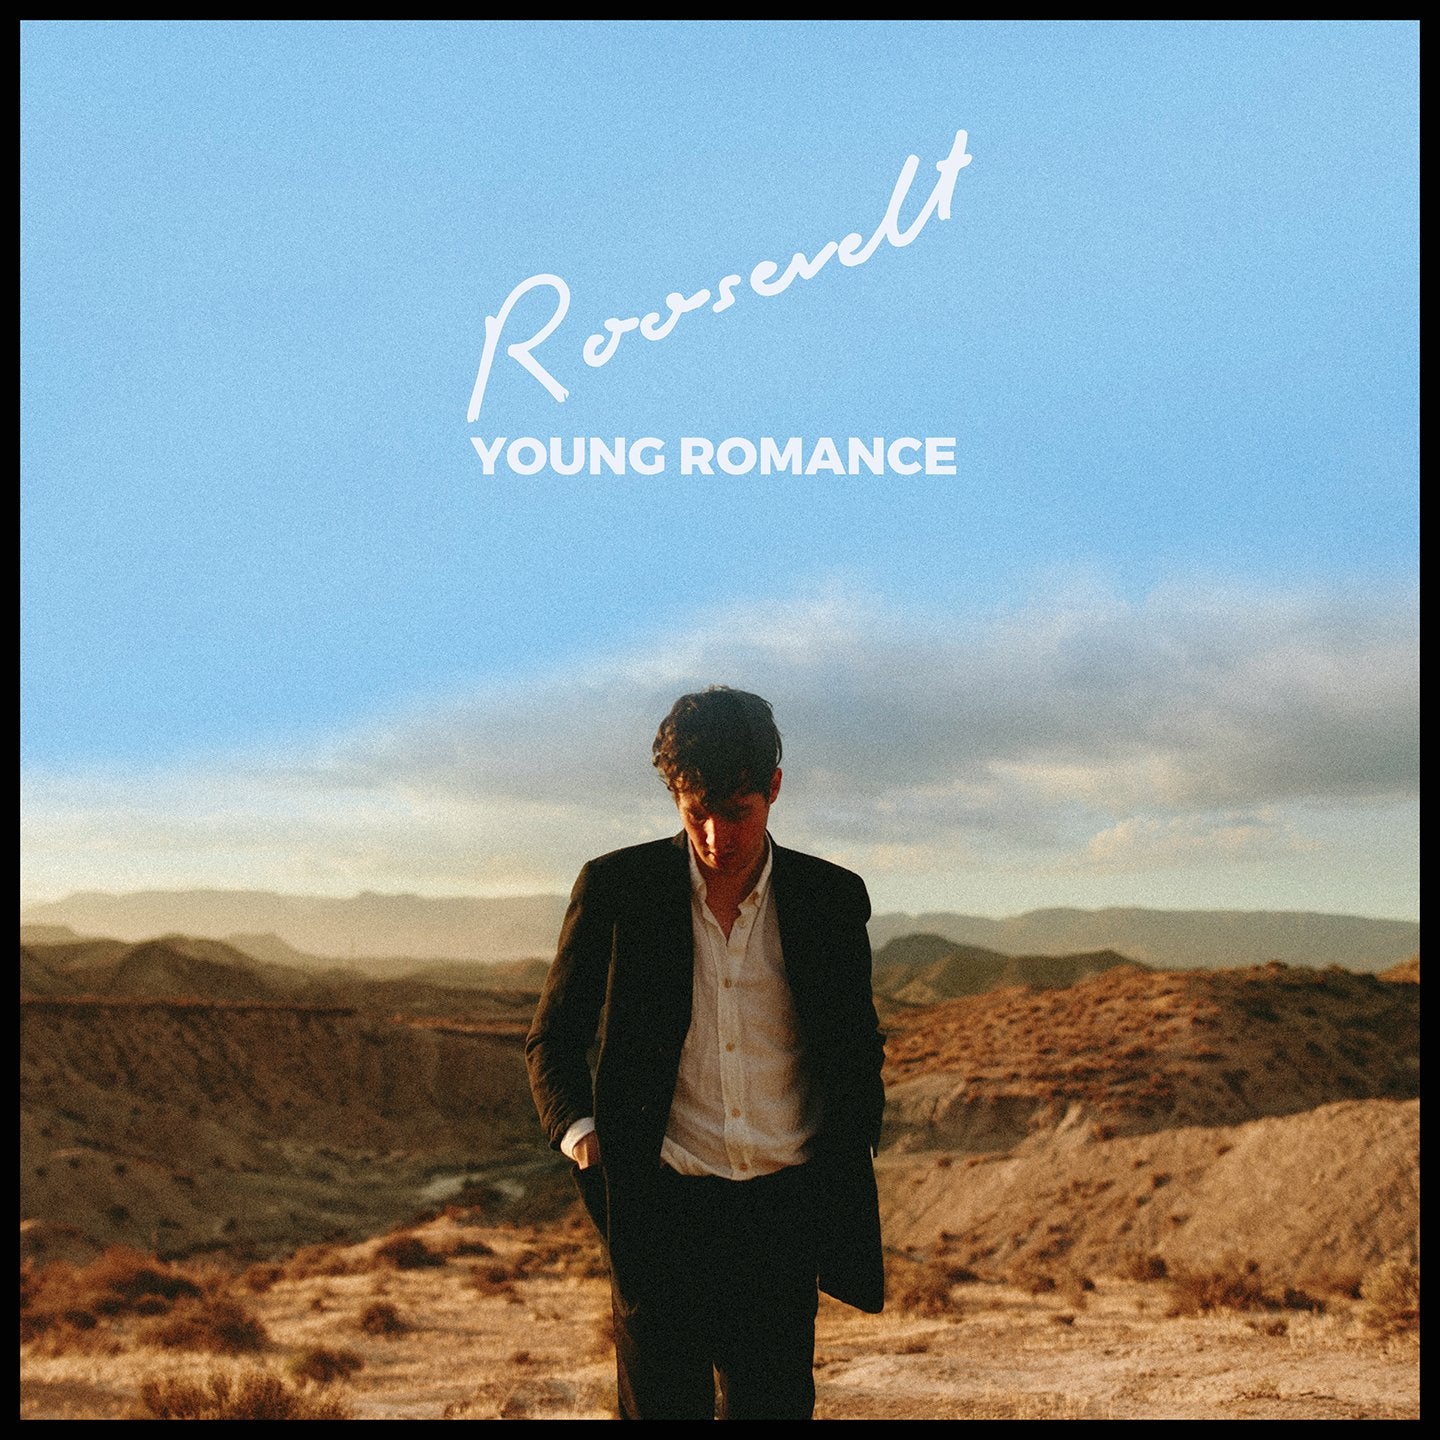 roosevelt young romance city slang